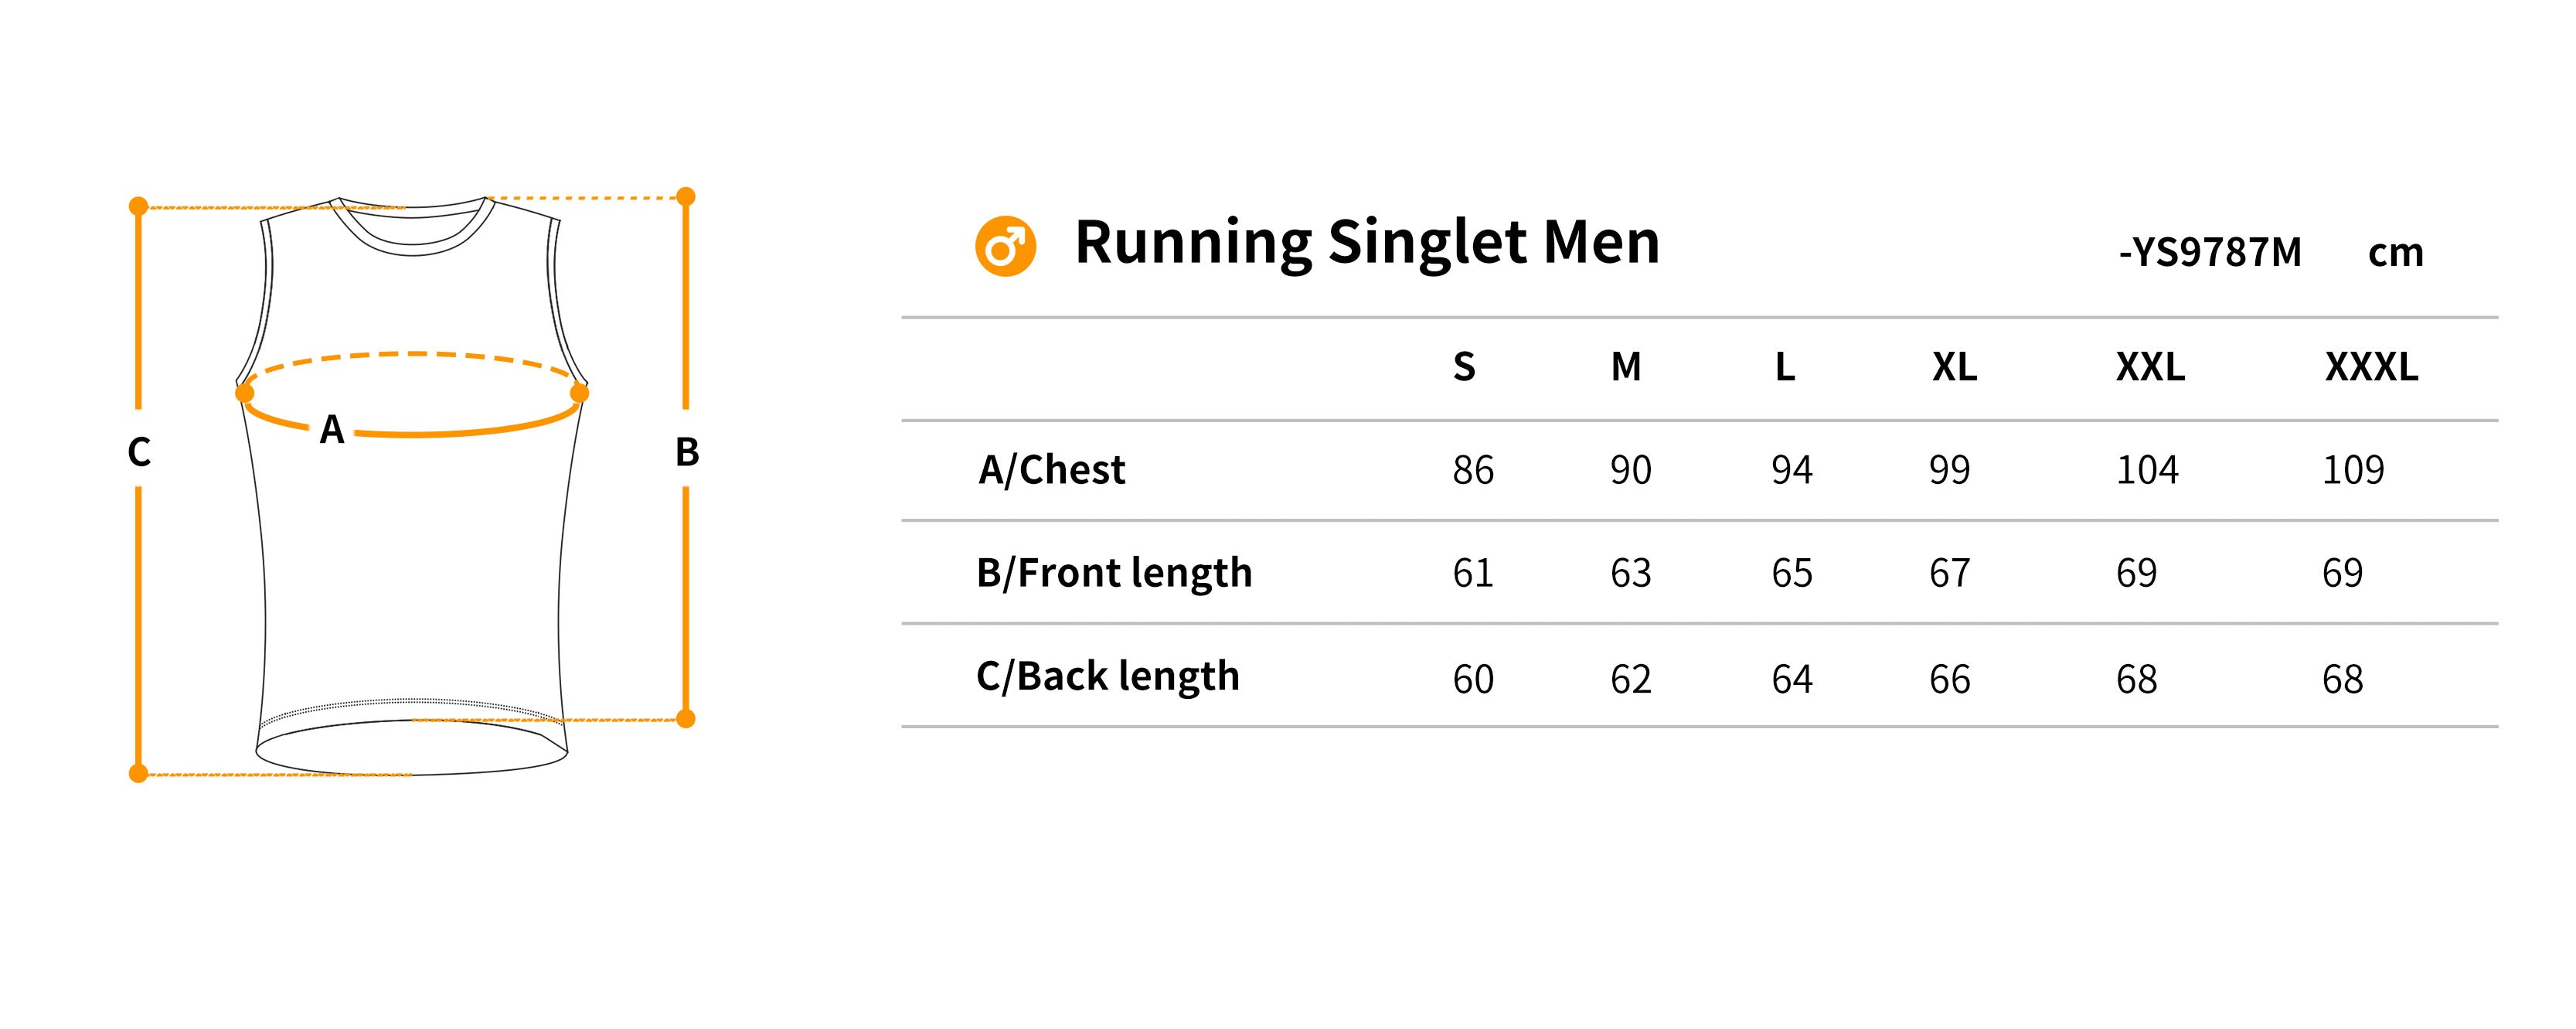 Running Singlet size chart